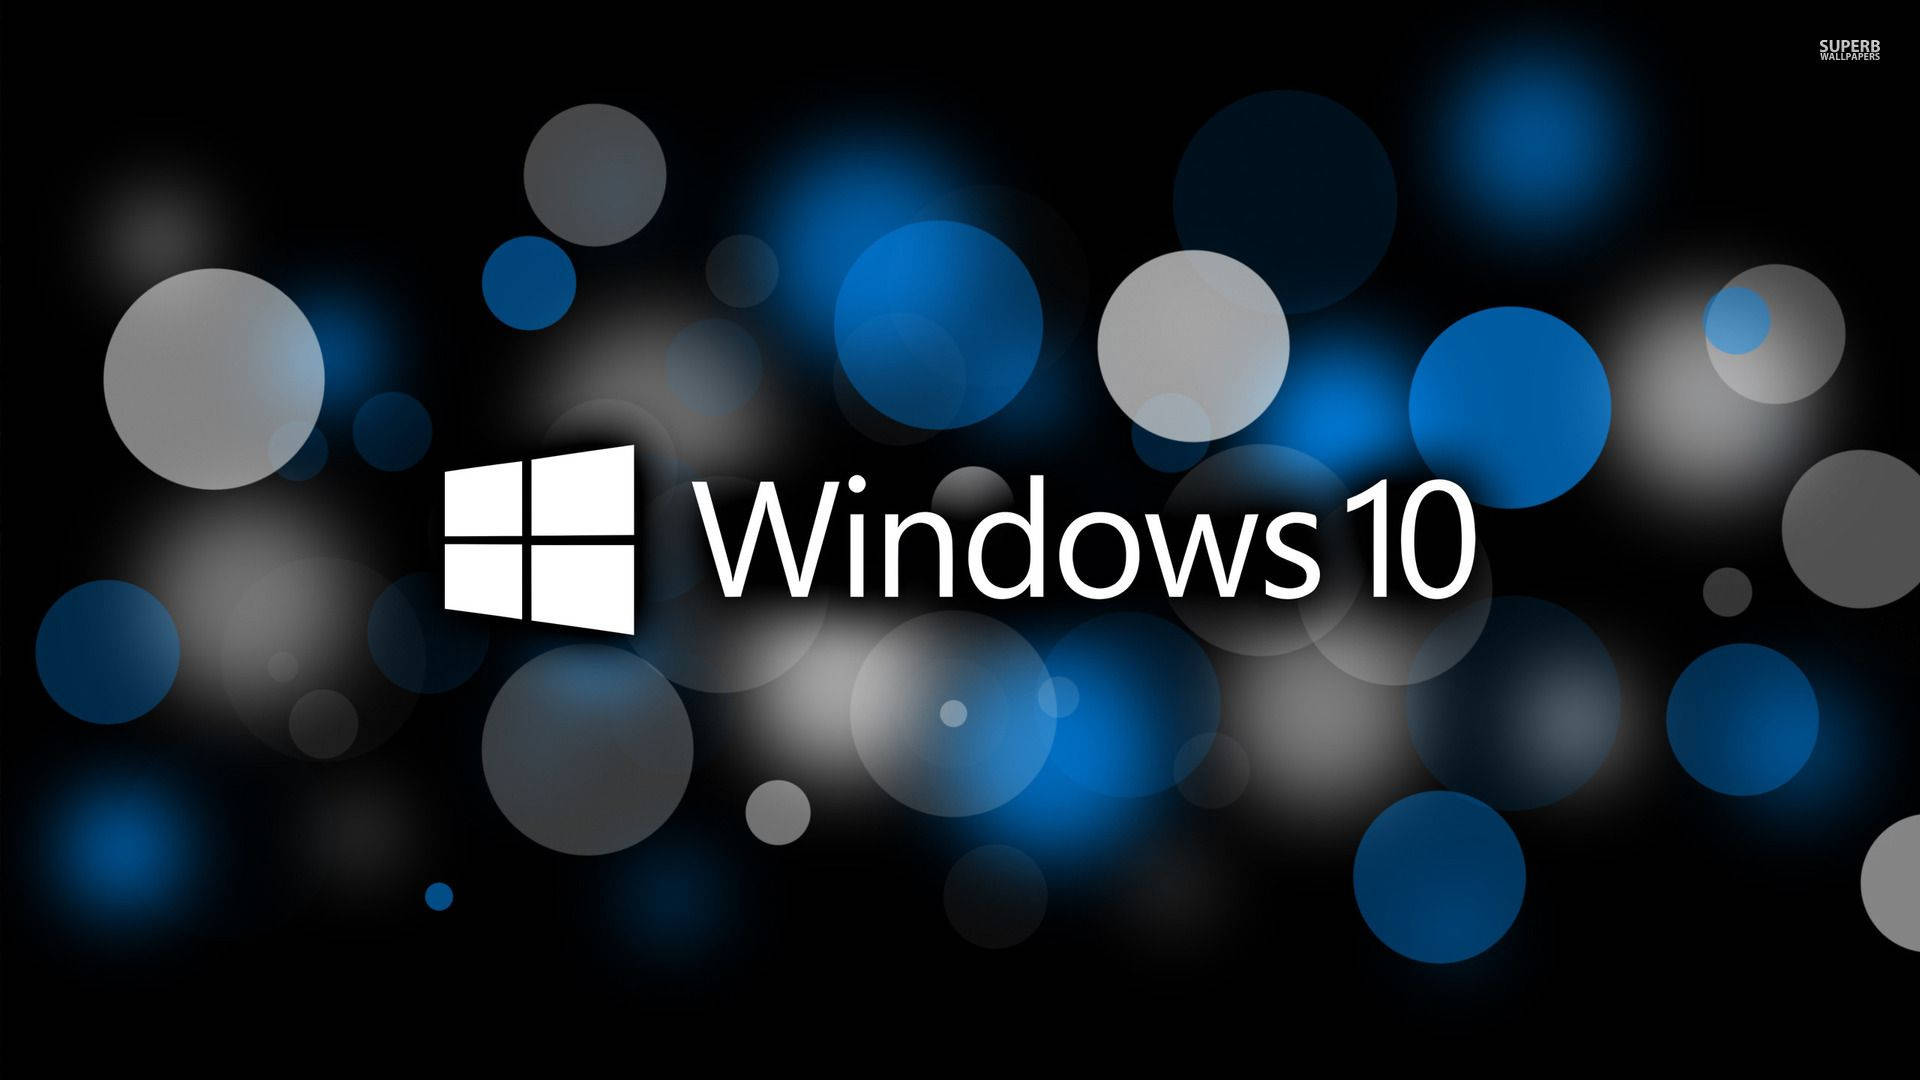 Windows 10 Hd Light Specks